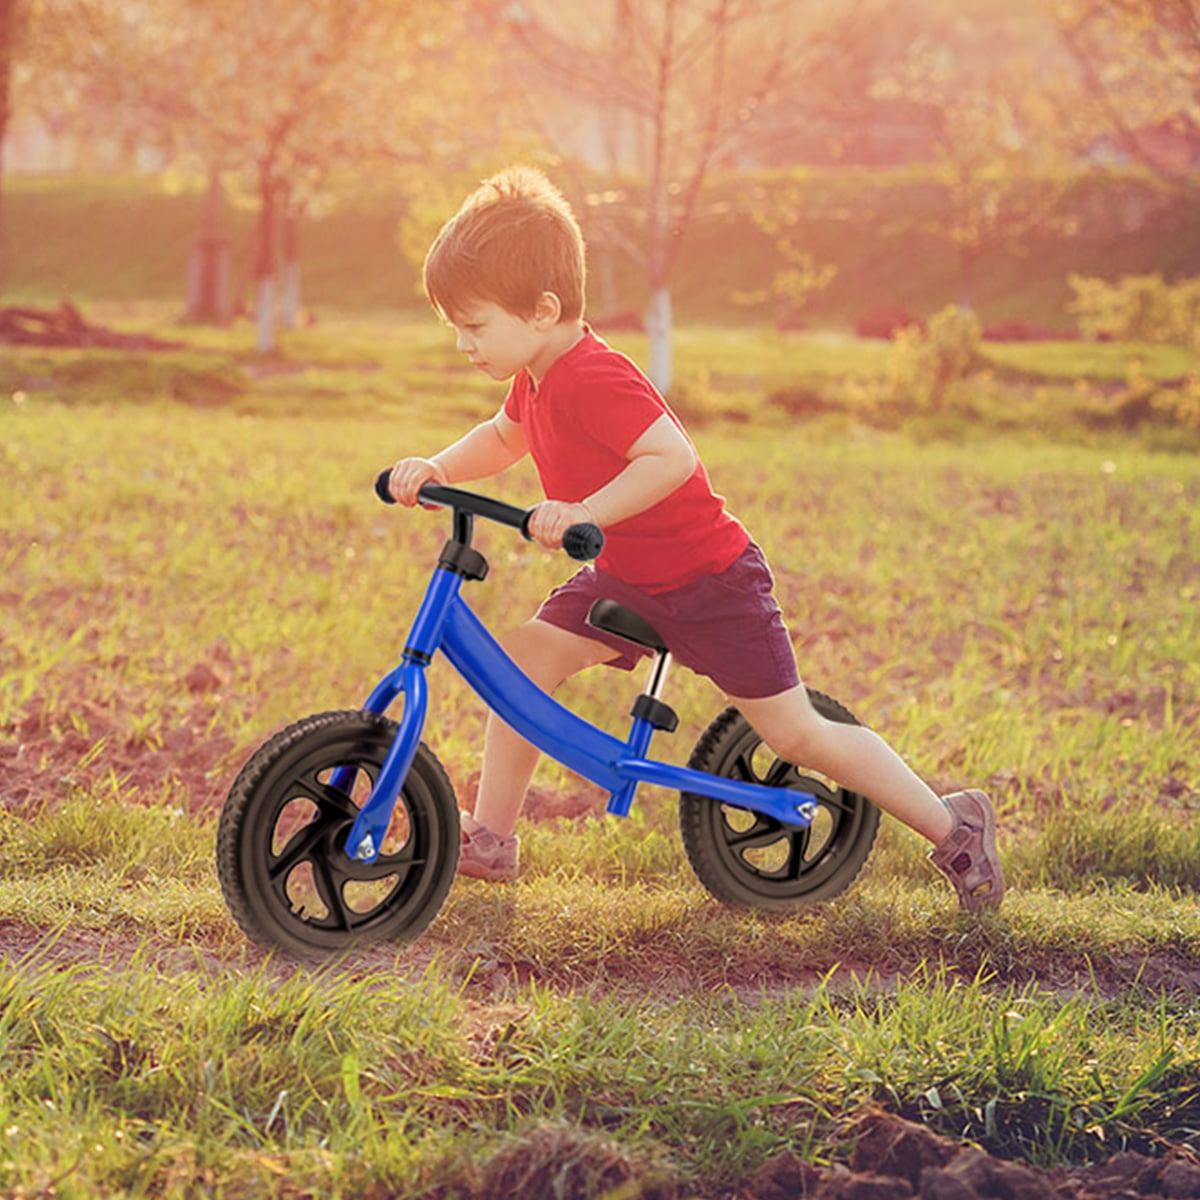 Premium Baby Balance Bike YOUQIQU Balance Bike Kid's Balance Bike for 3 4 5 6 Year Old Boys and Girls 12 Toddler Balance Bike with Magnesium Alloy Frame and EVA Foam Tires White 